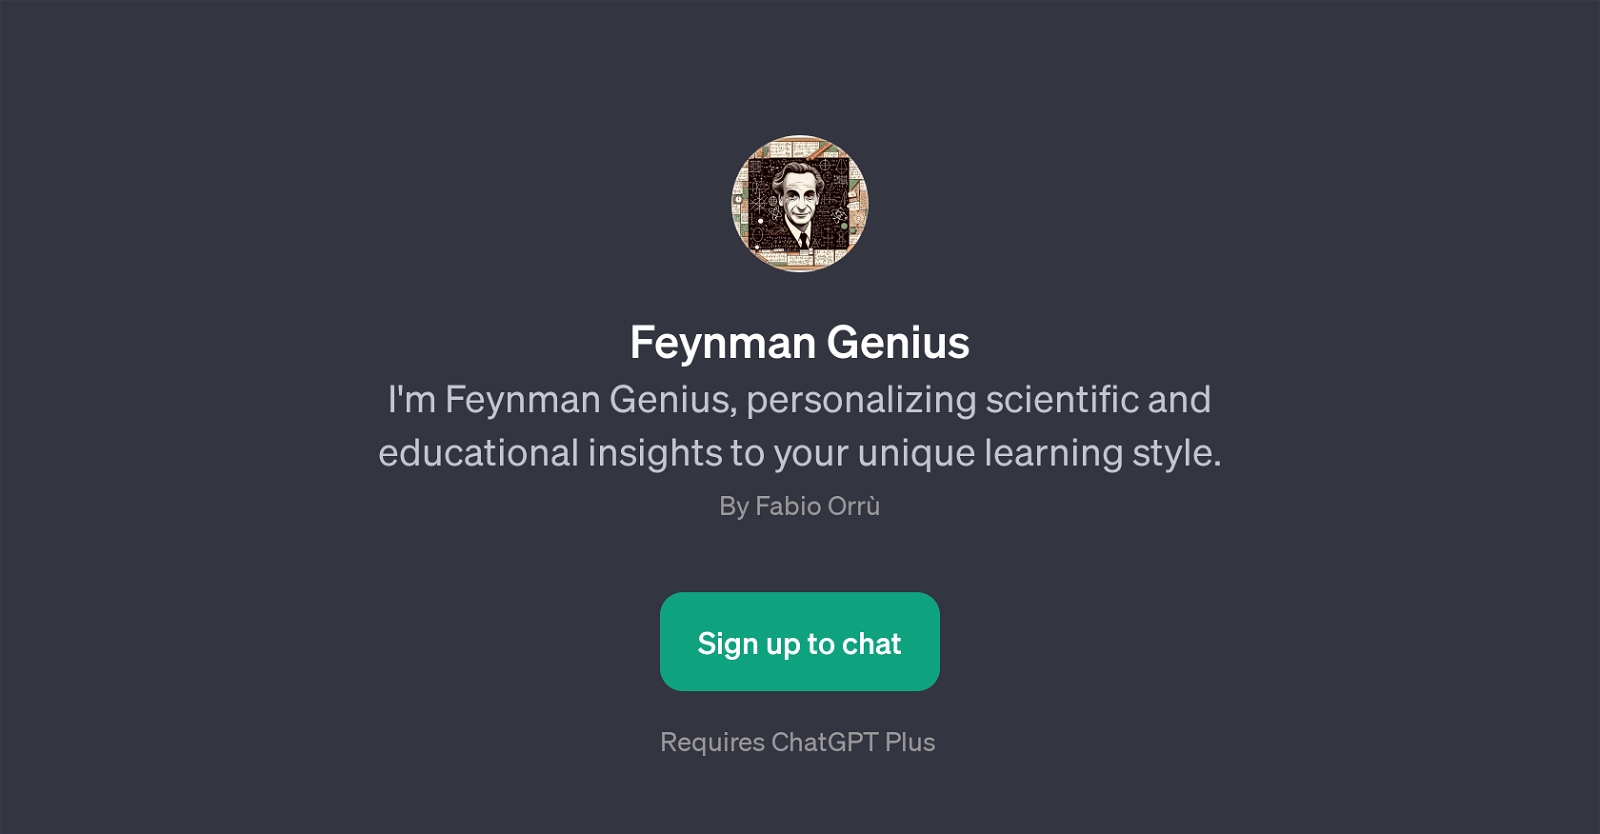 Feynman Genius website